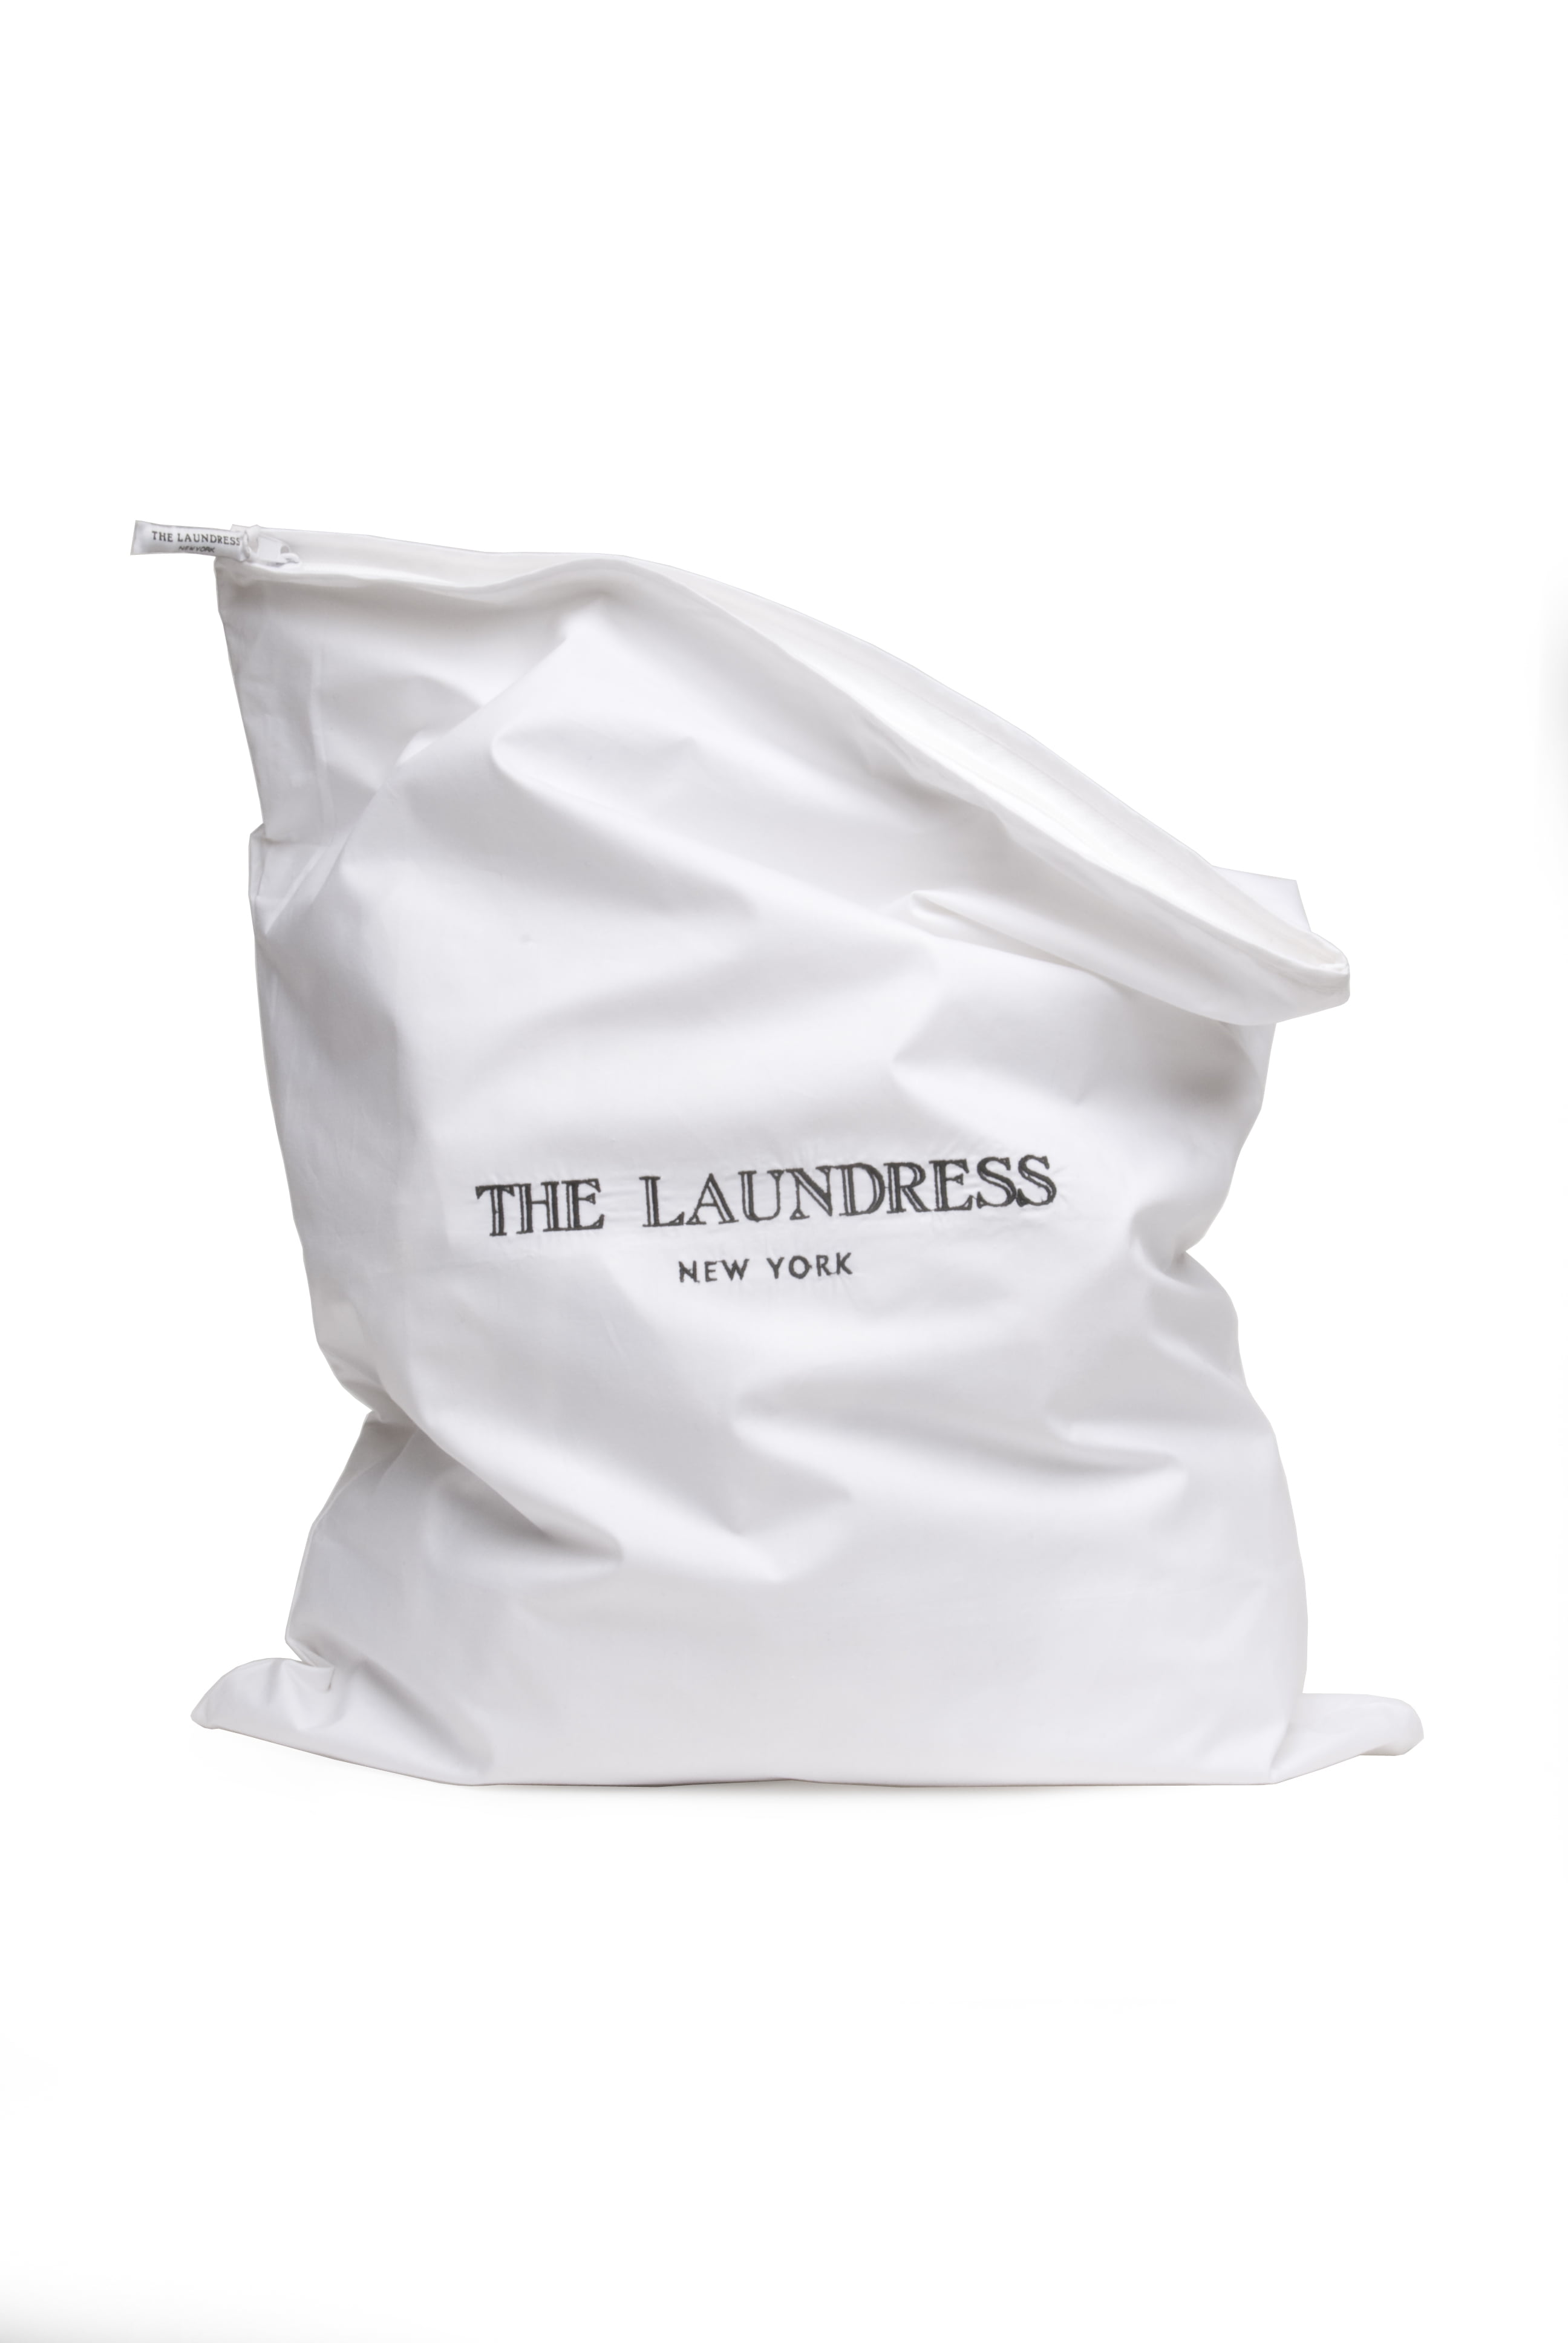 The Laundress Mesh Washing Bags